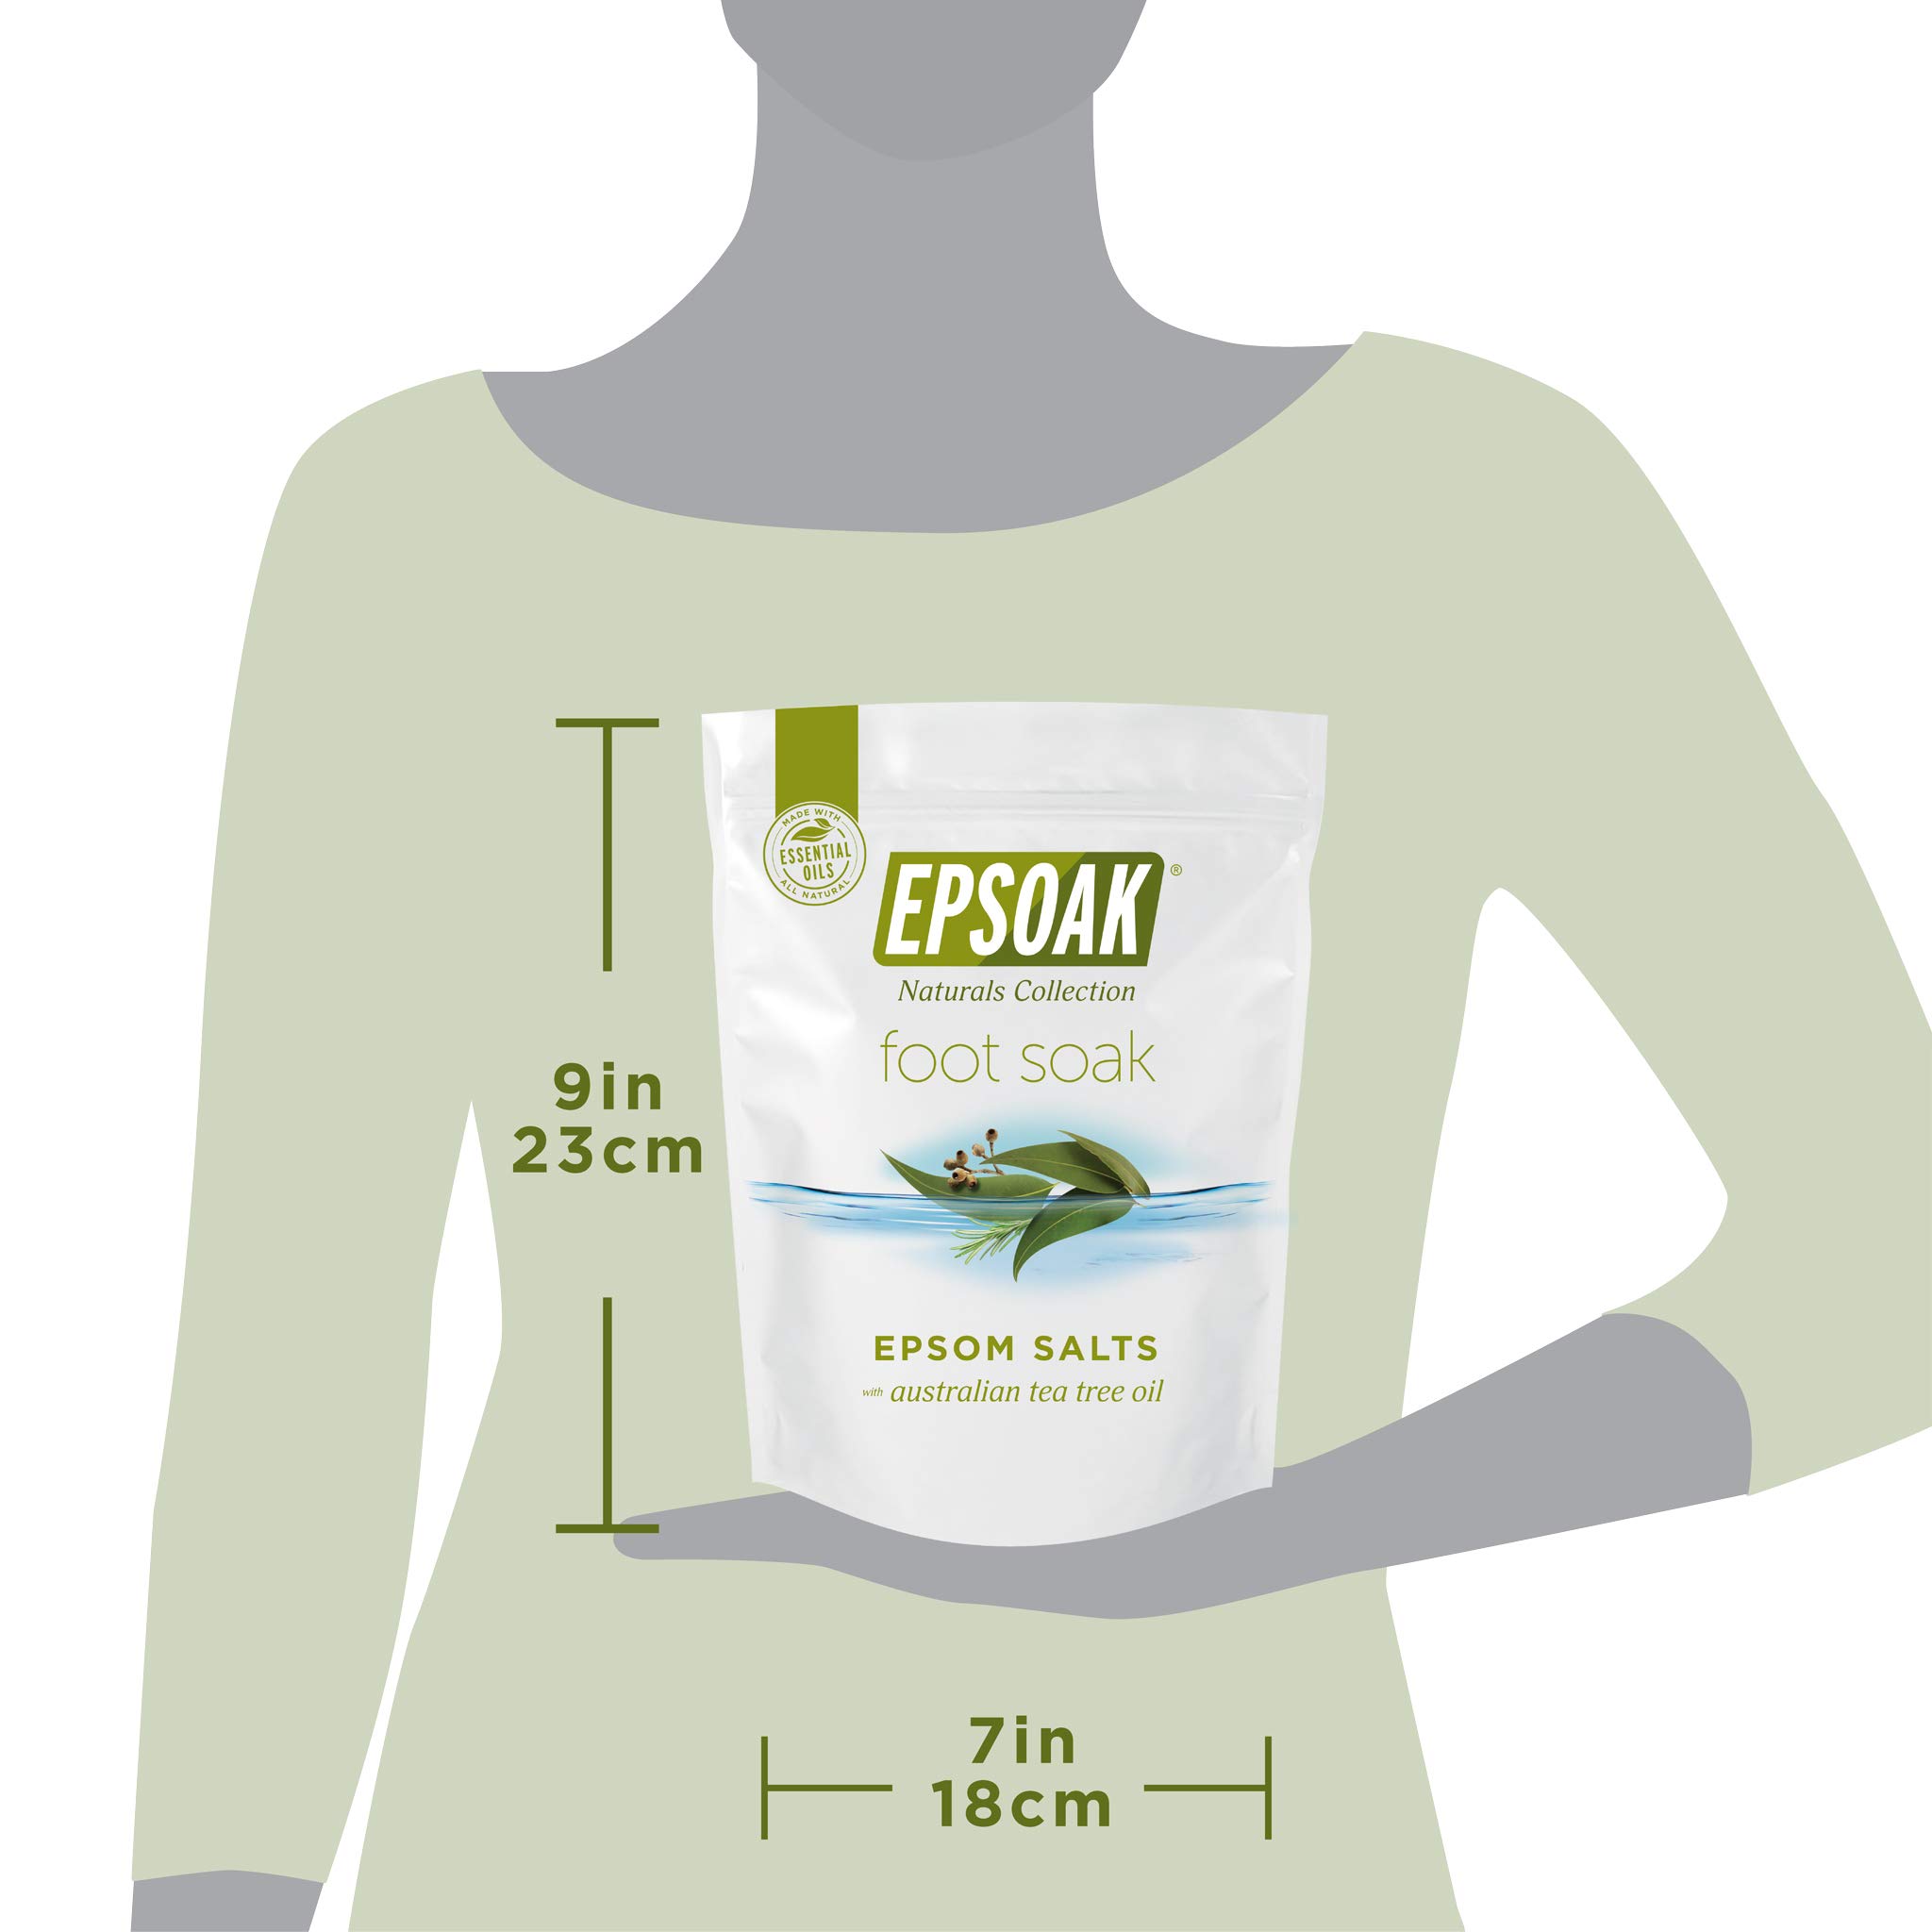 Tea Tree Oil Foot Soak with Epsoak Epsom Salt - 2 Pound Value Bag - Made in The USA